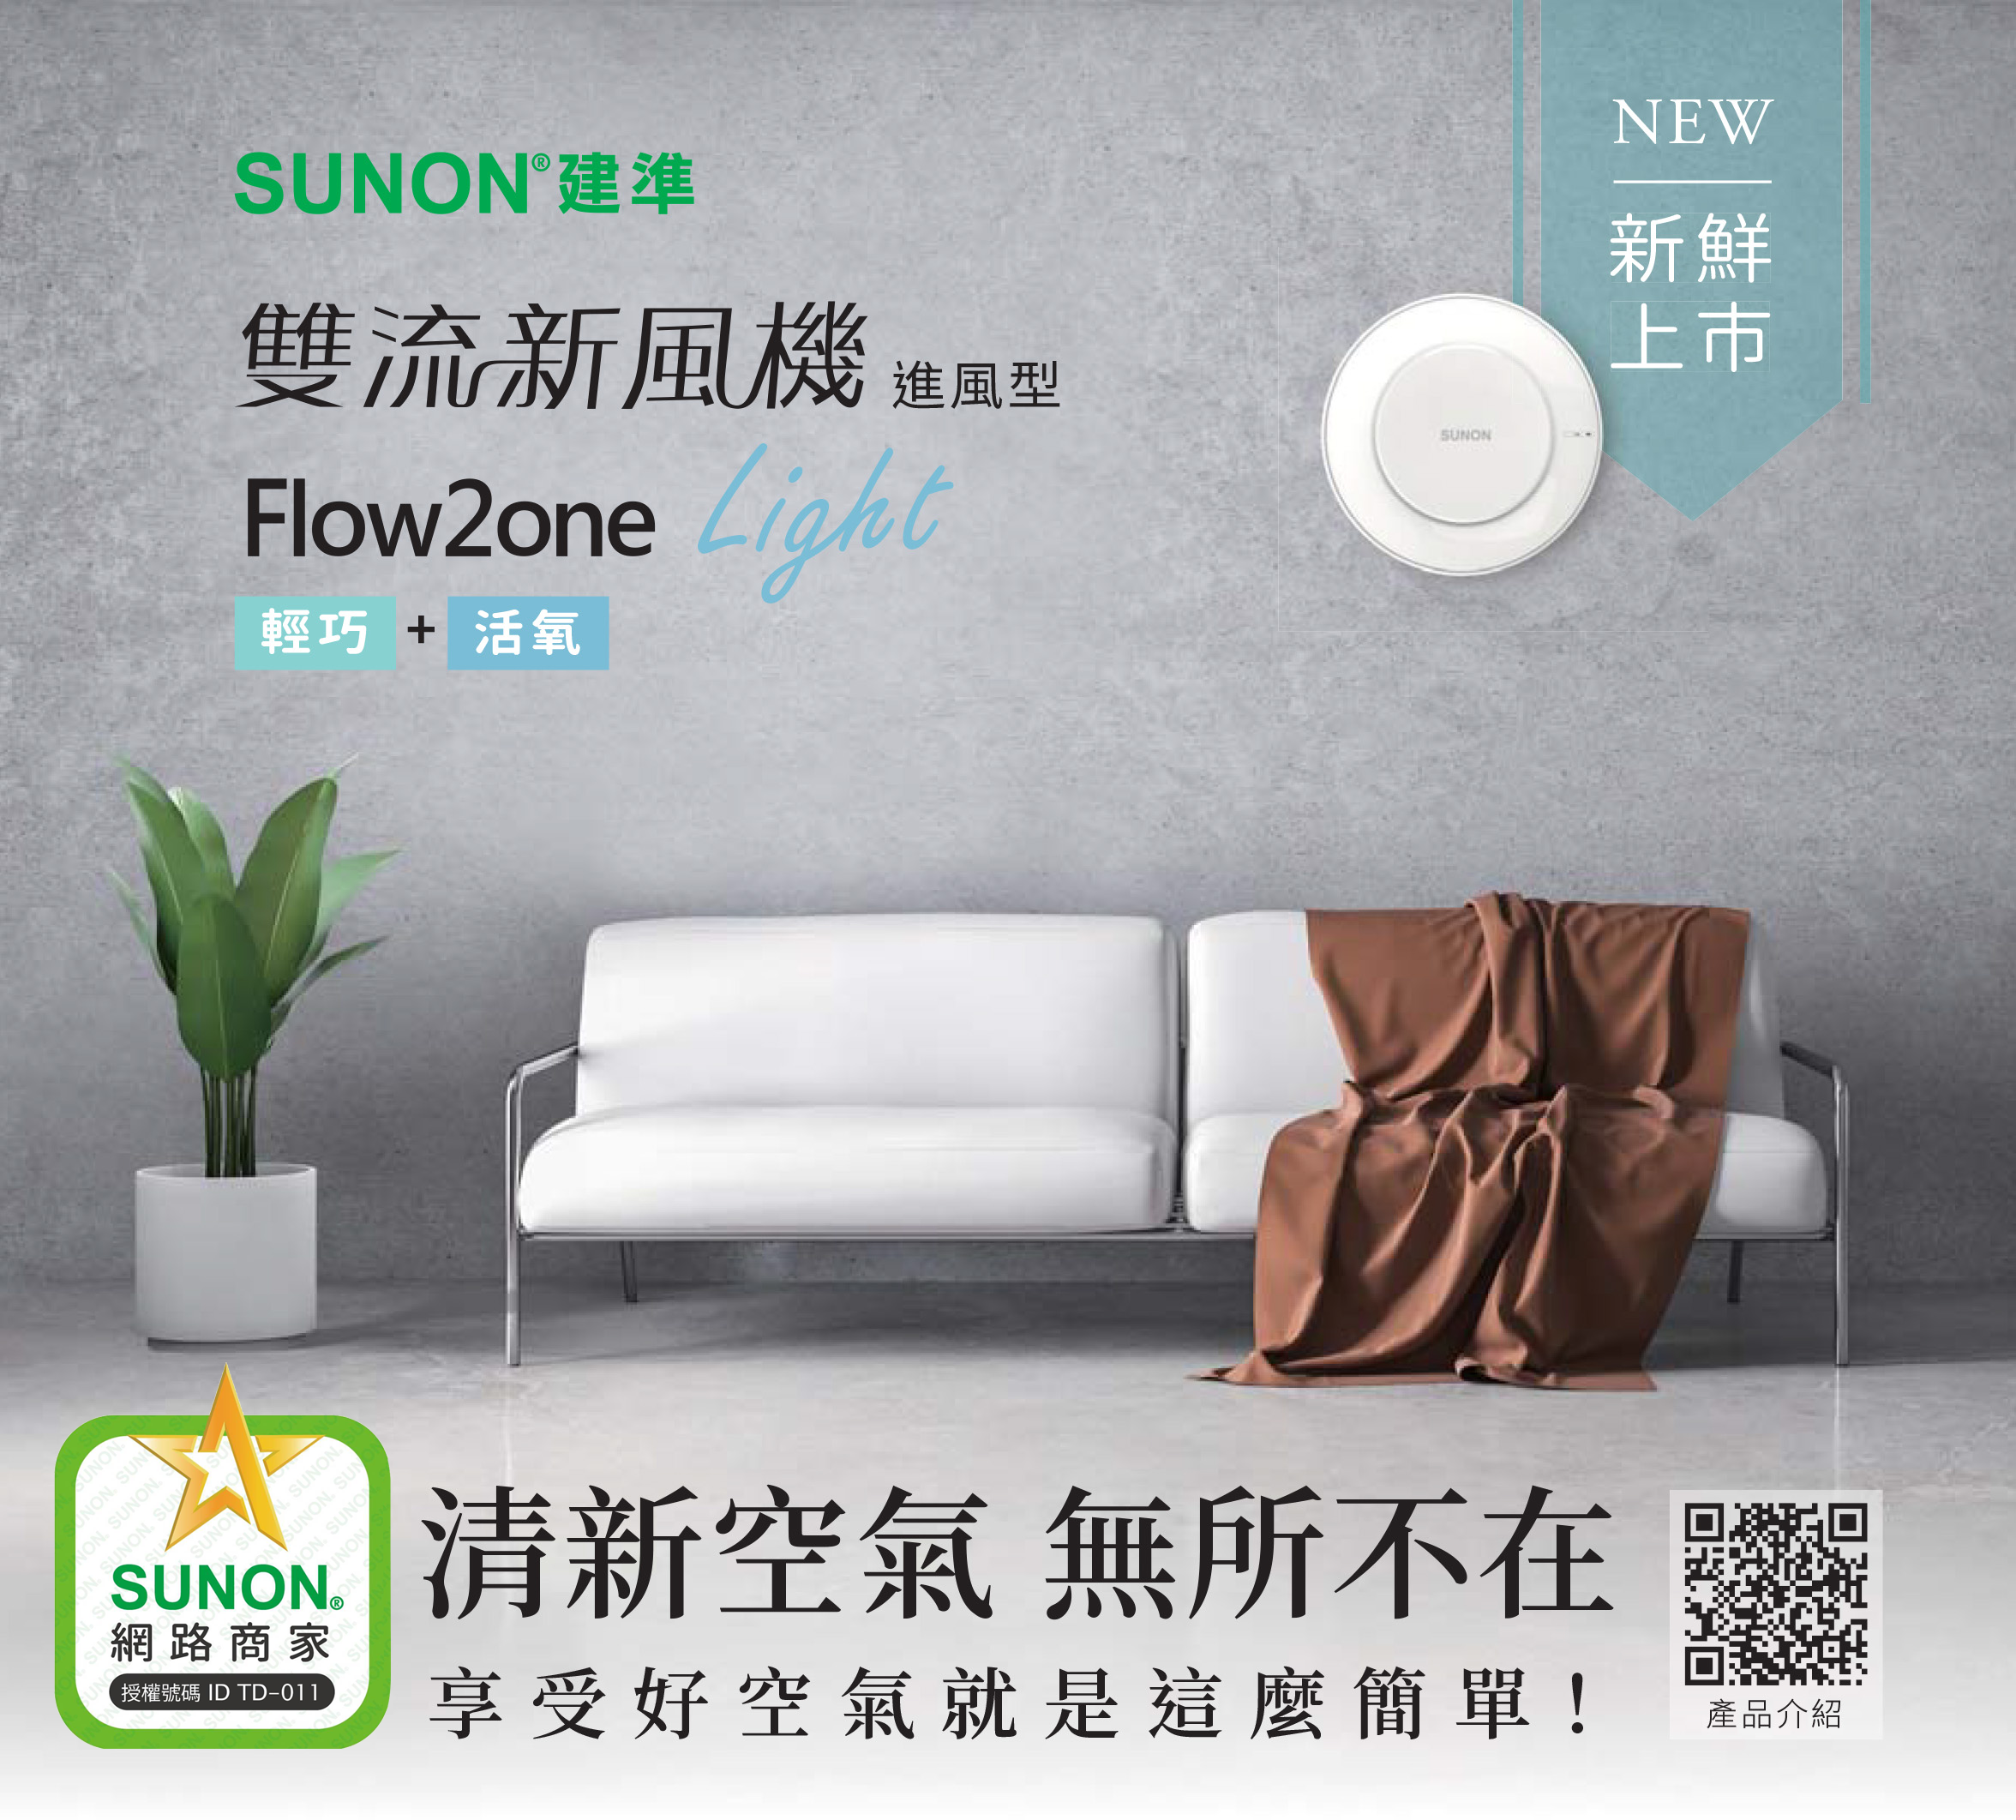 SUNON Flow2 One Light雙流新風機(進風型) 補氧機 活氧換氣過濾 空氣淨化 AHR10T00-01